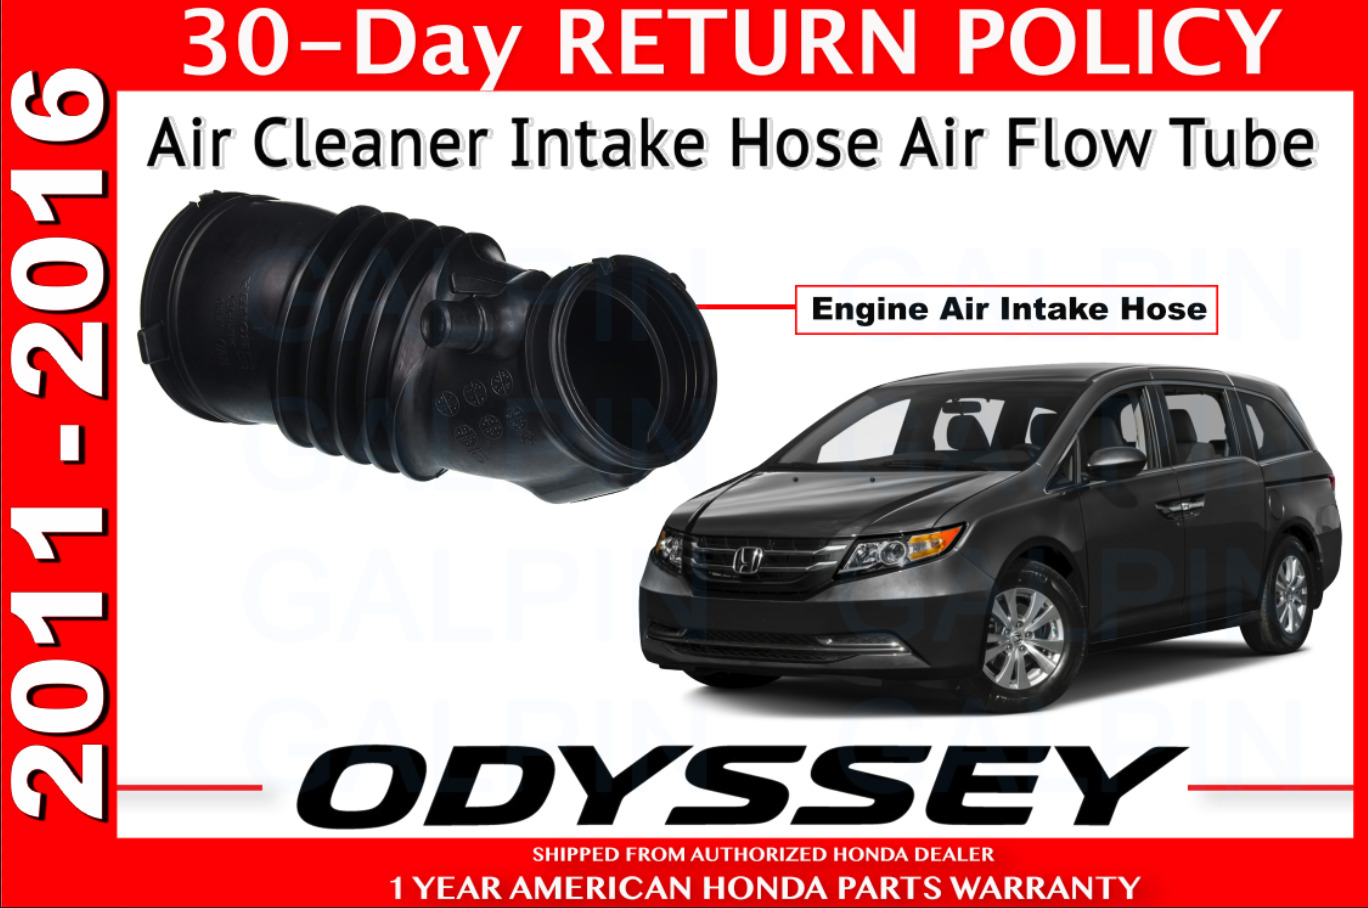 Genuine Honda Odyssey Air Cleaner Intake Hose Air Flow Tube (11-16) 17228RV0A00